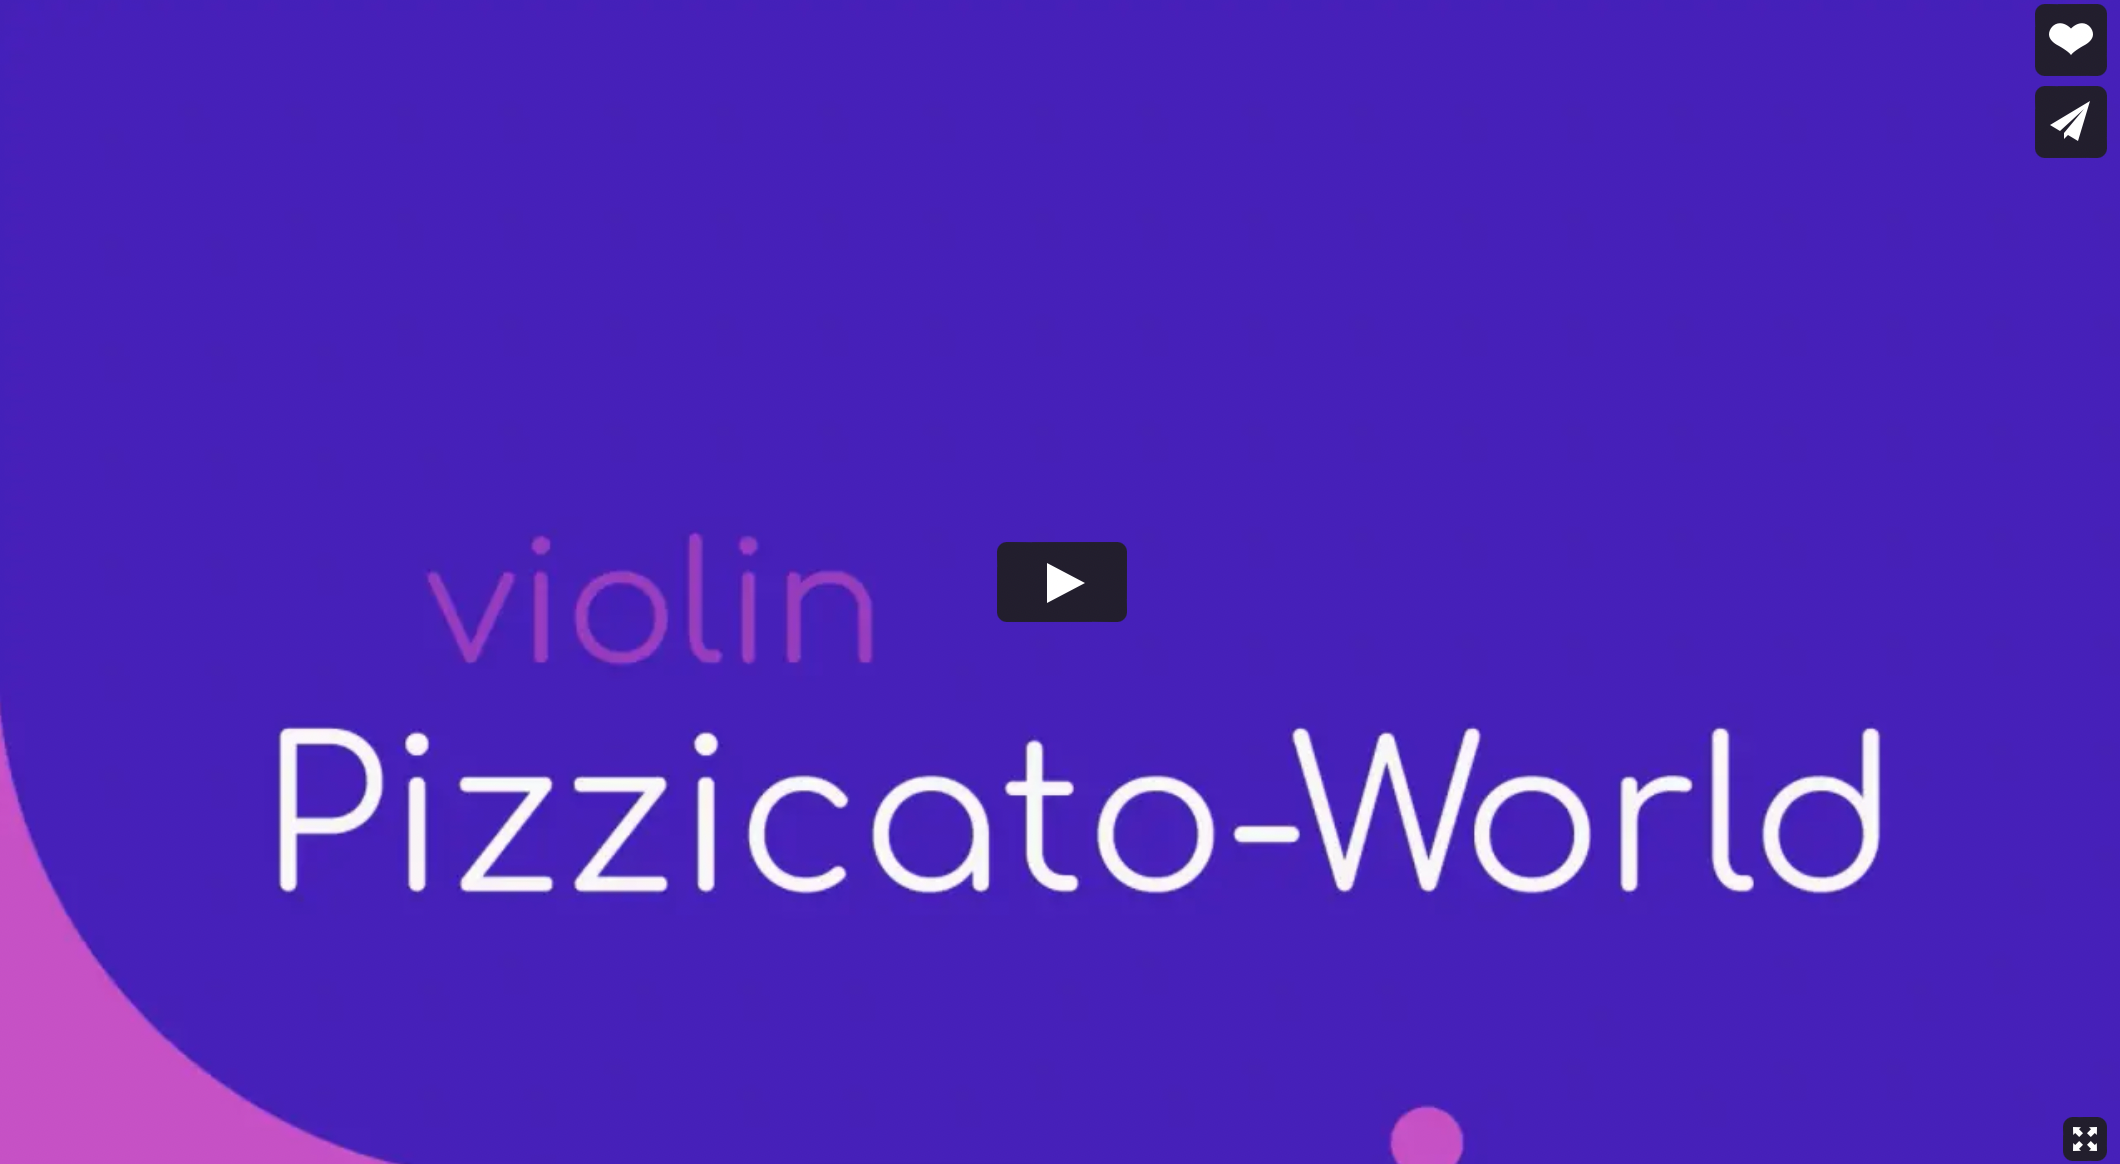 Pizzicato-World violin and viola